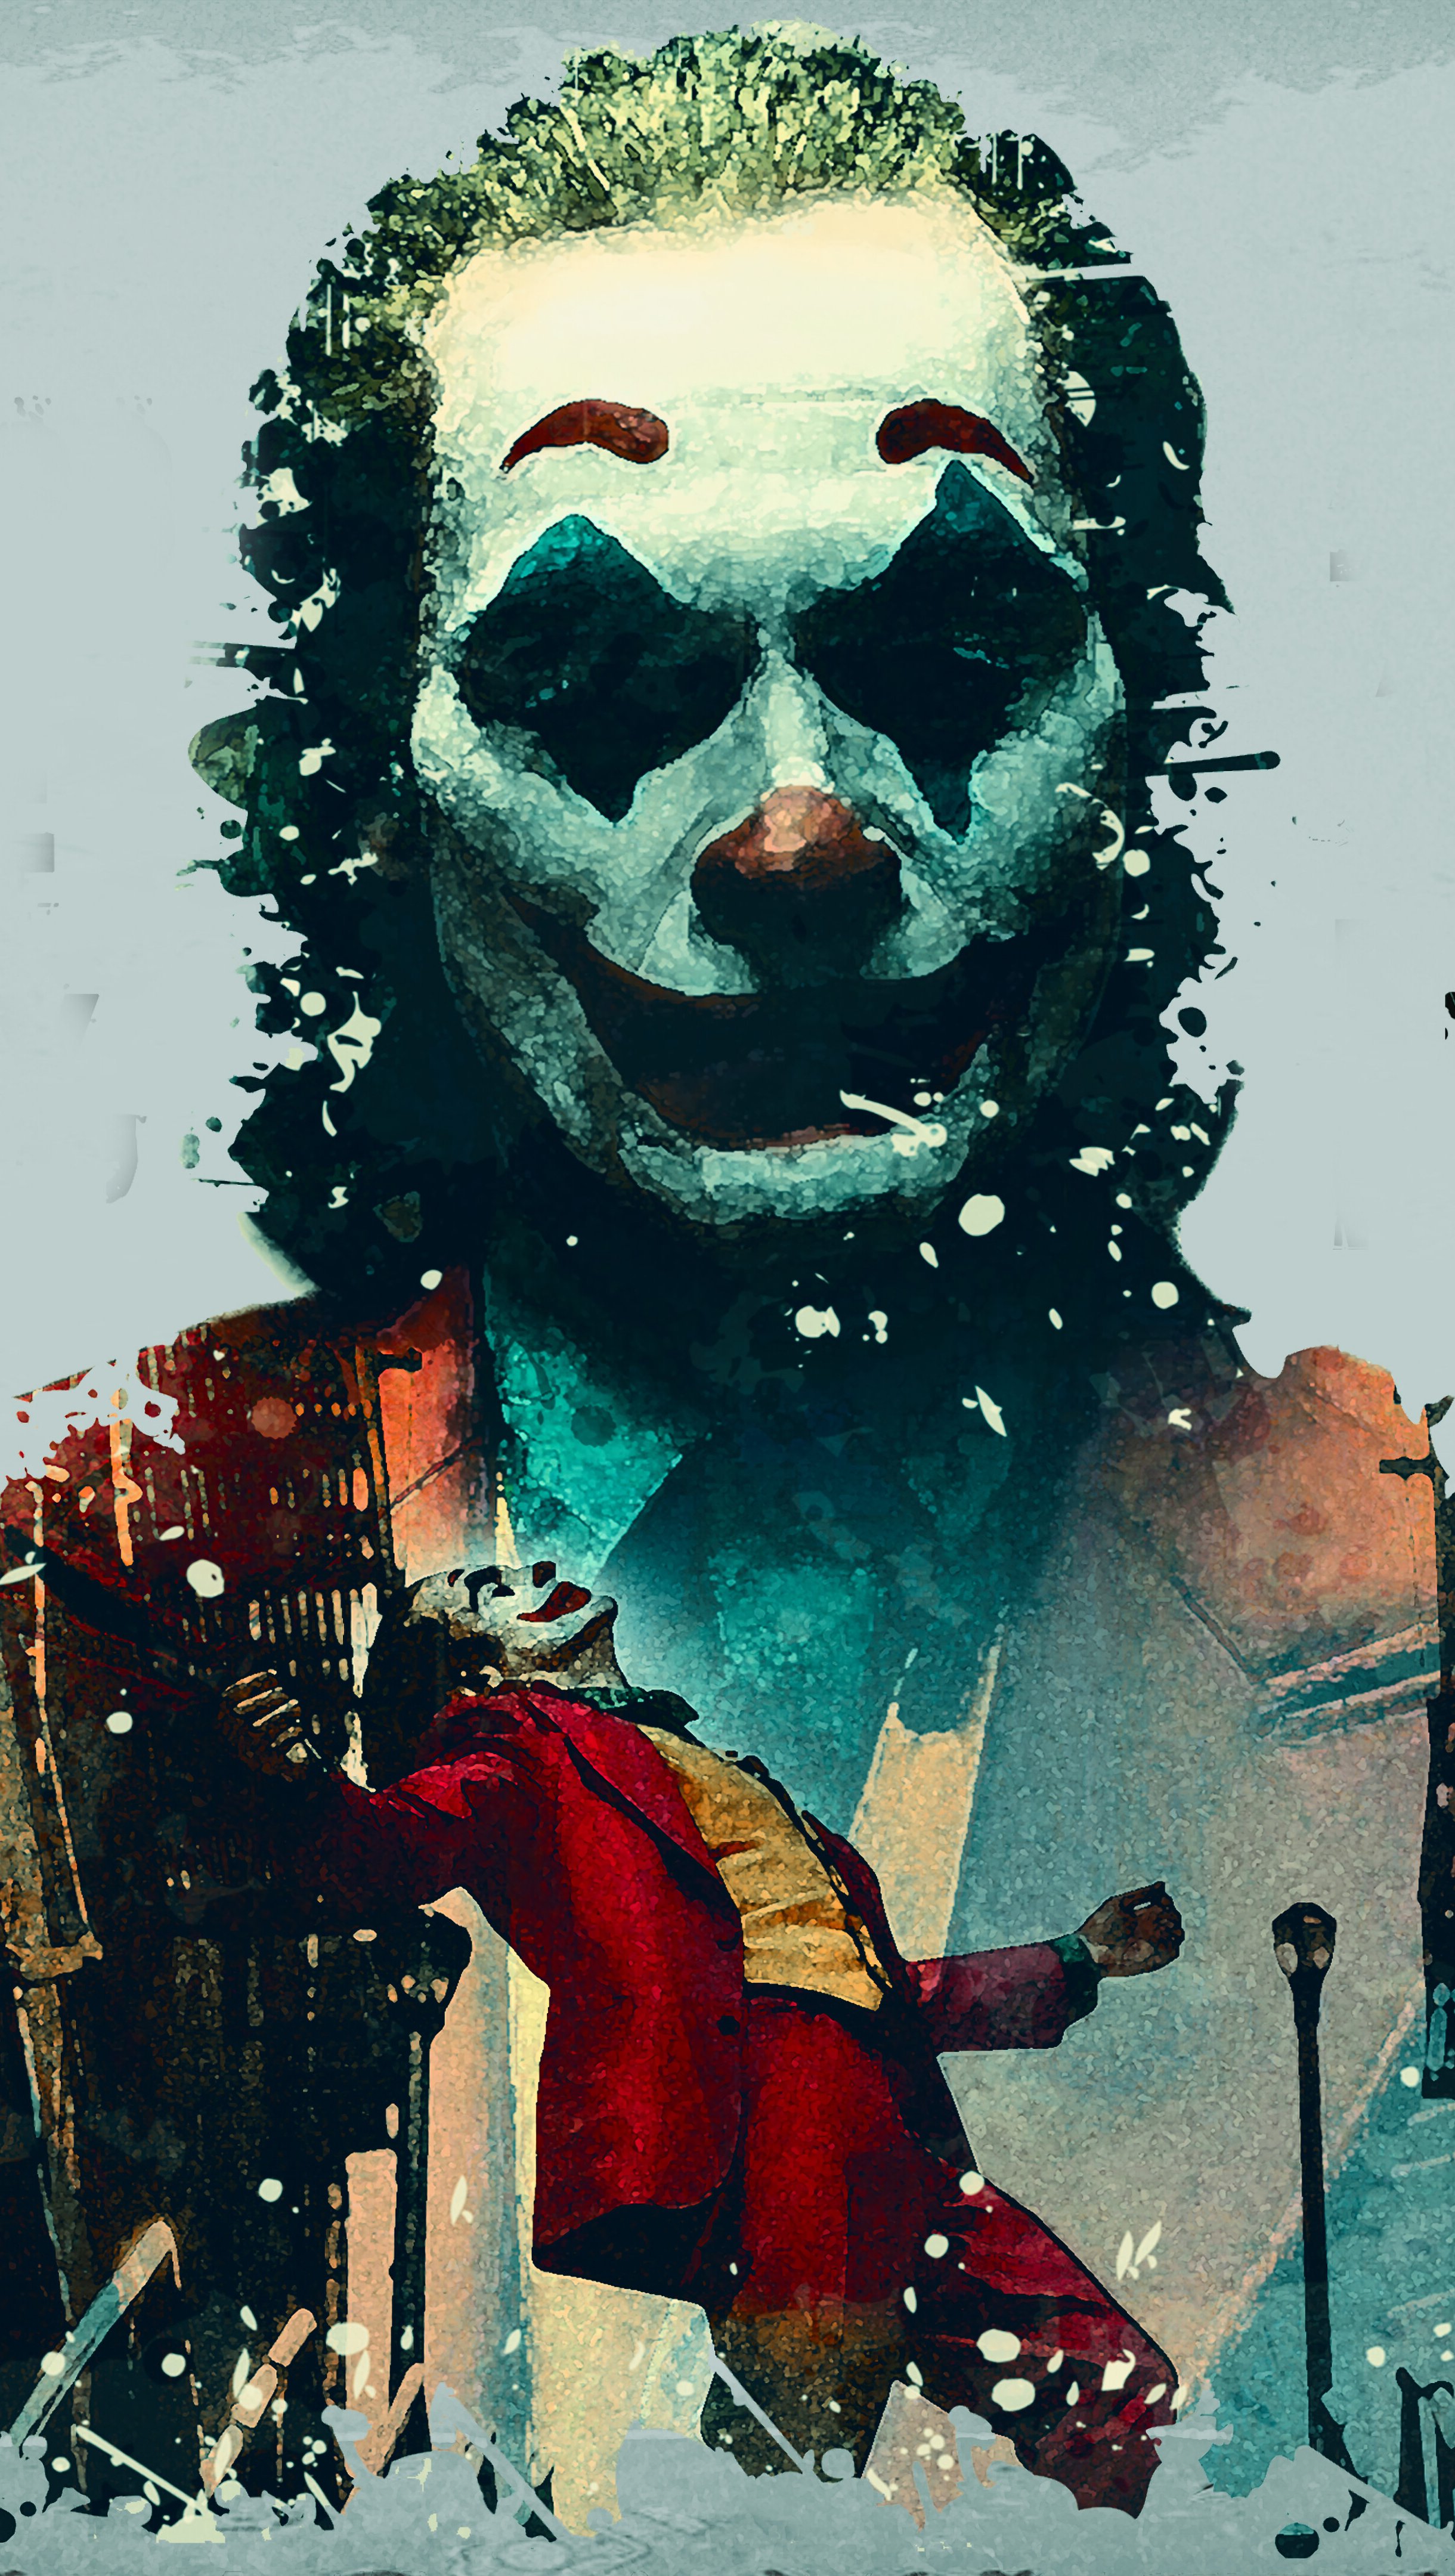 Joker Movie with Joaquin Phoenix Wallpaper 8k Ultra HD